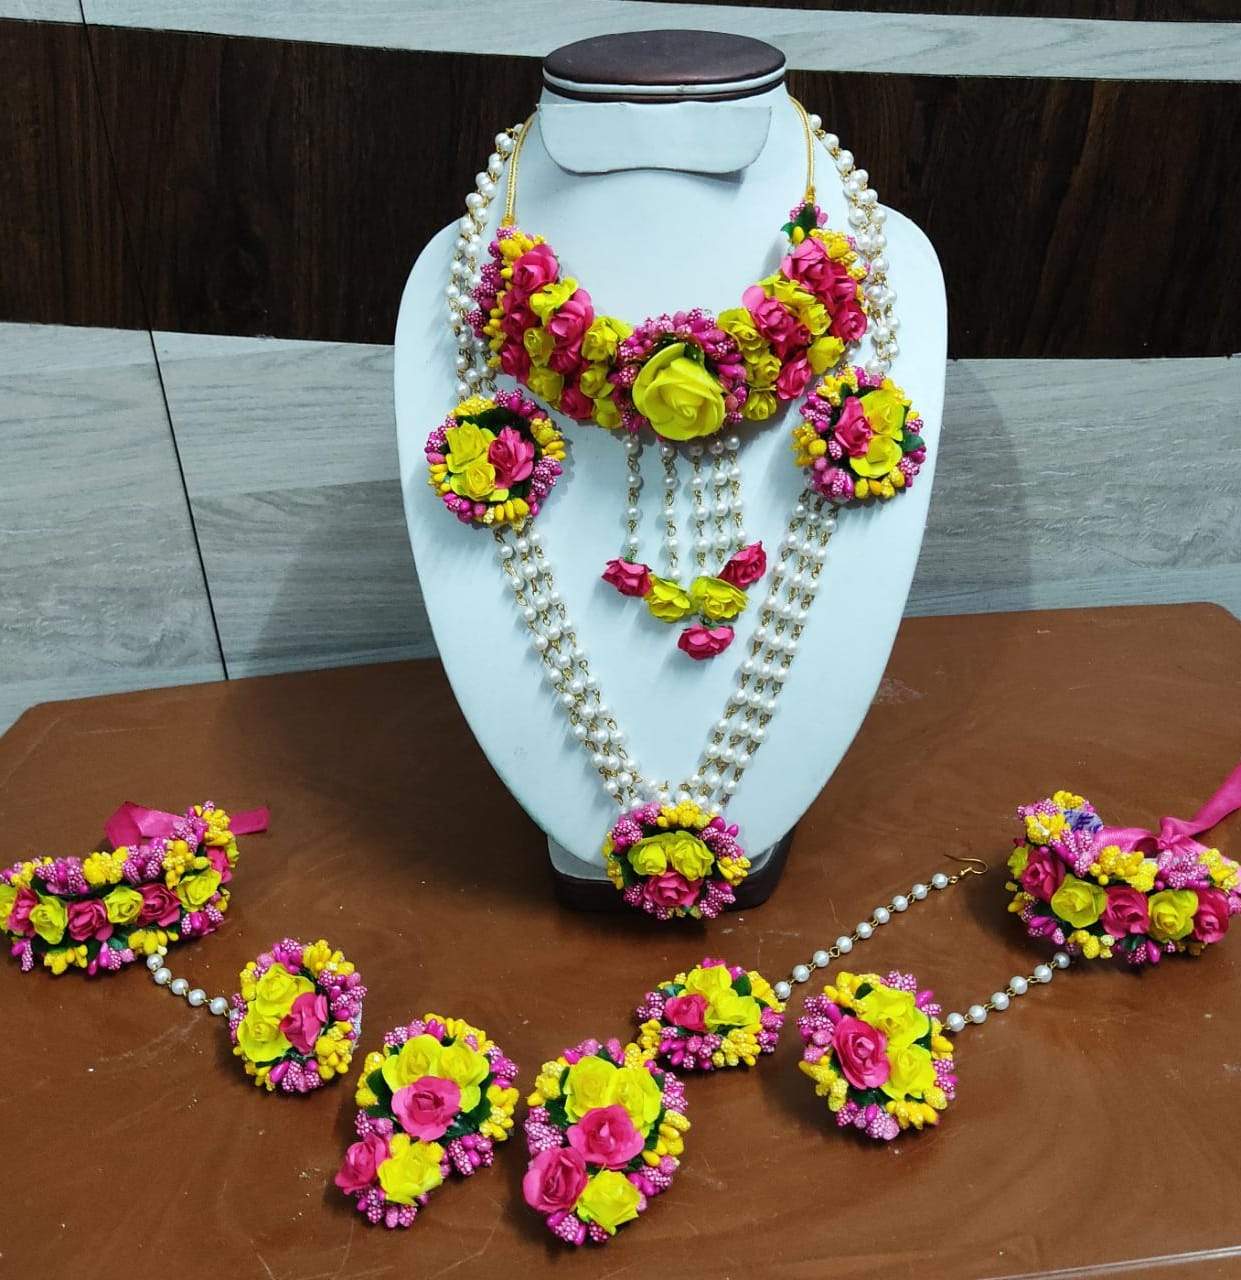 Lamansh Baby 👶shower 1 Necklace, 1 Choker, 2 Earrings, 1 Maangtika & 2 Bracelet attached to ring set / Yellow pink LAMANSH® Haldi Flower Jewellery Set For Women & Girls / Haldi Set